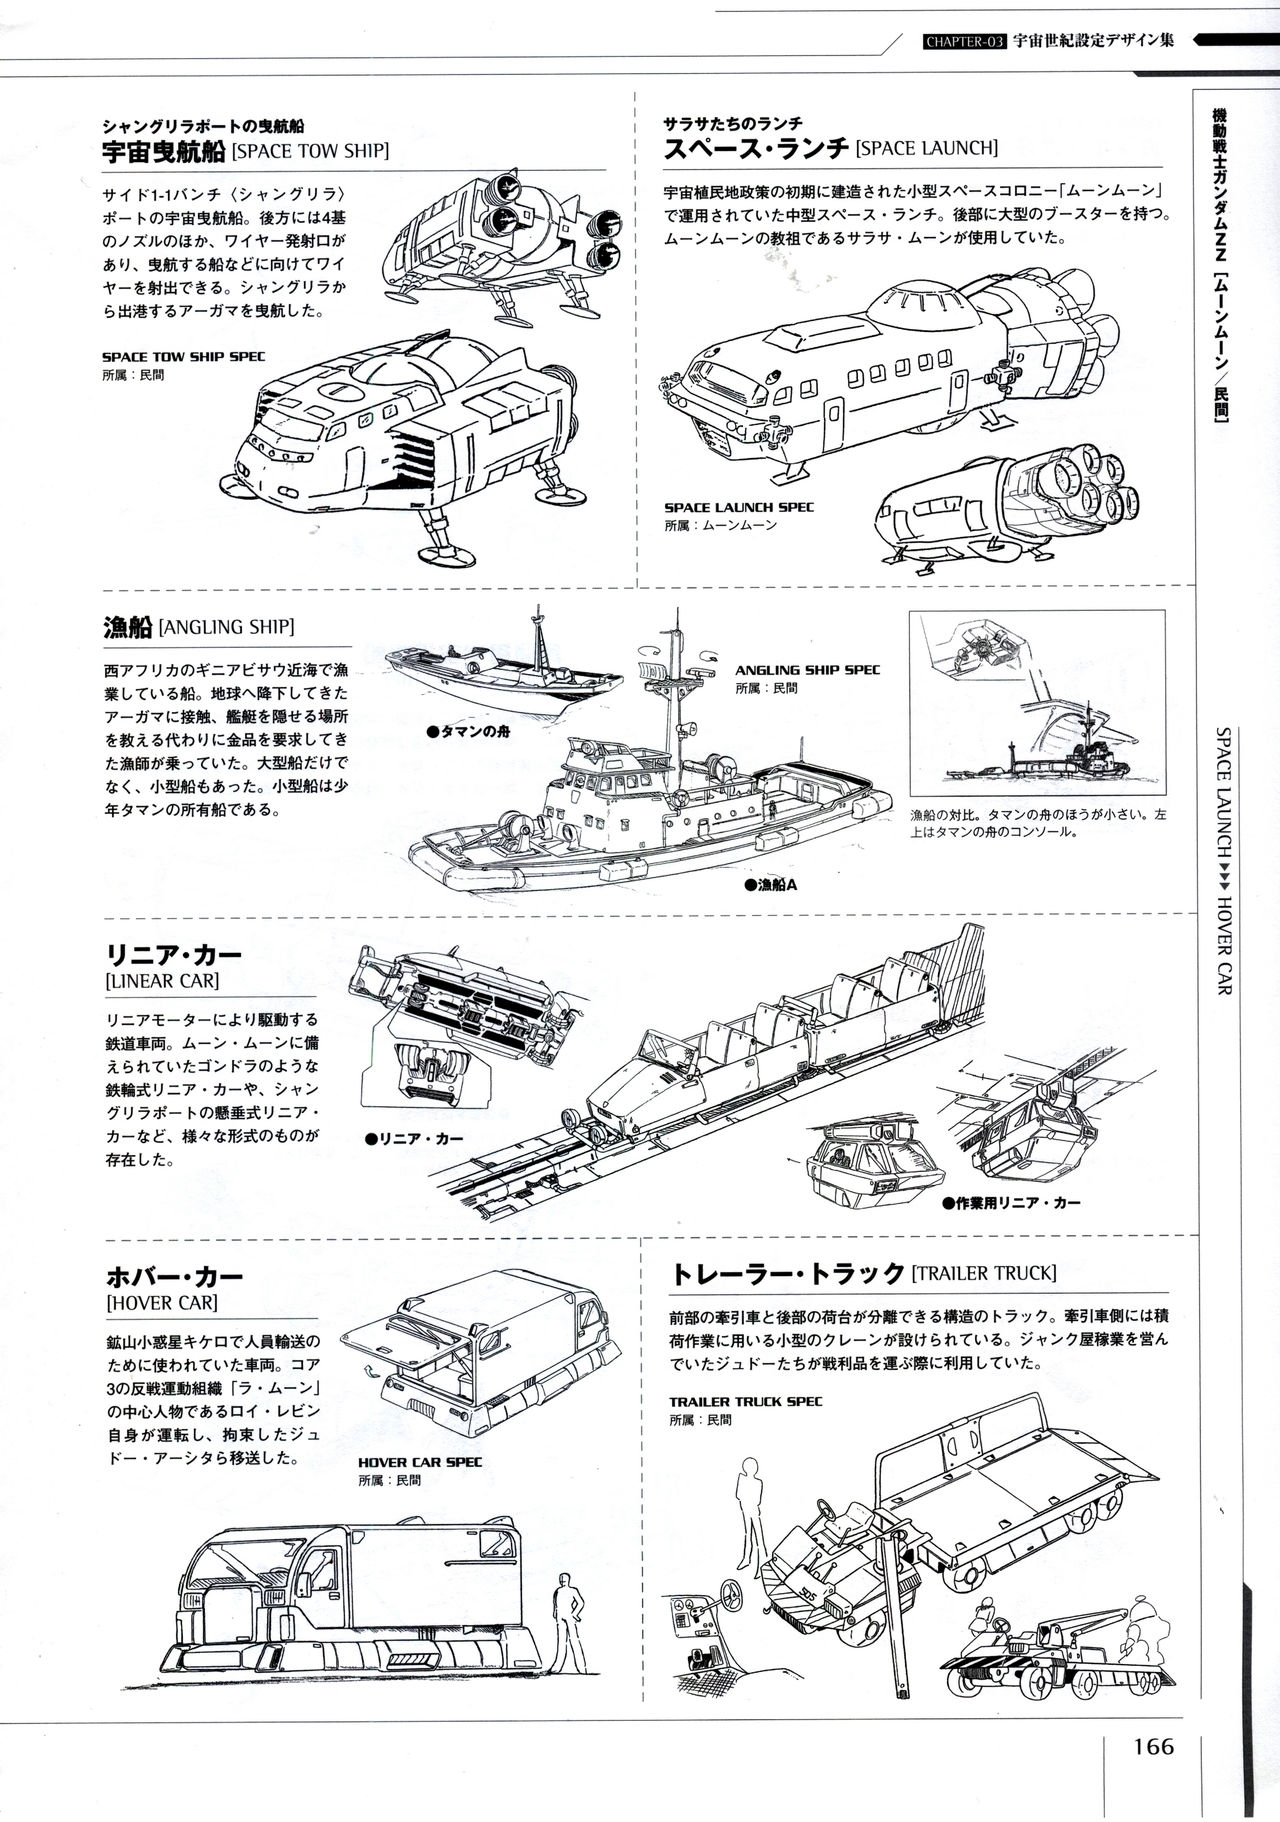 Mobile Suit Gundam - Ship & Aerospace Plane Encyclopedia - Revised Edition 171